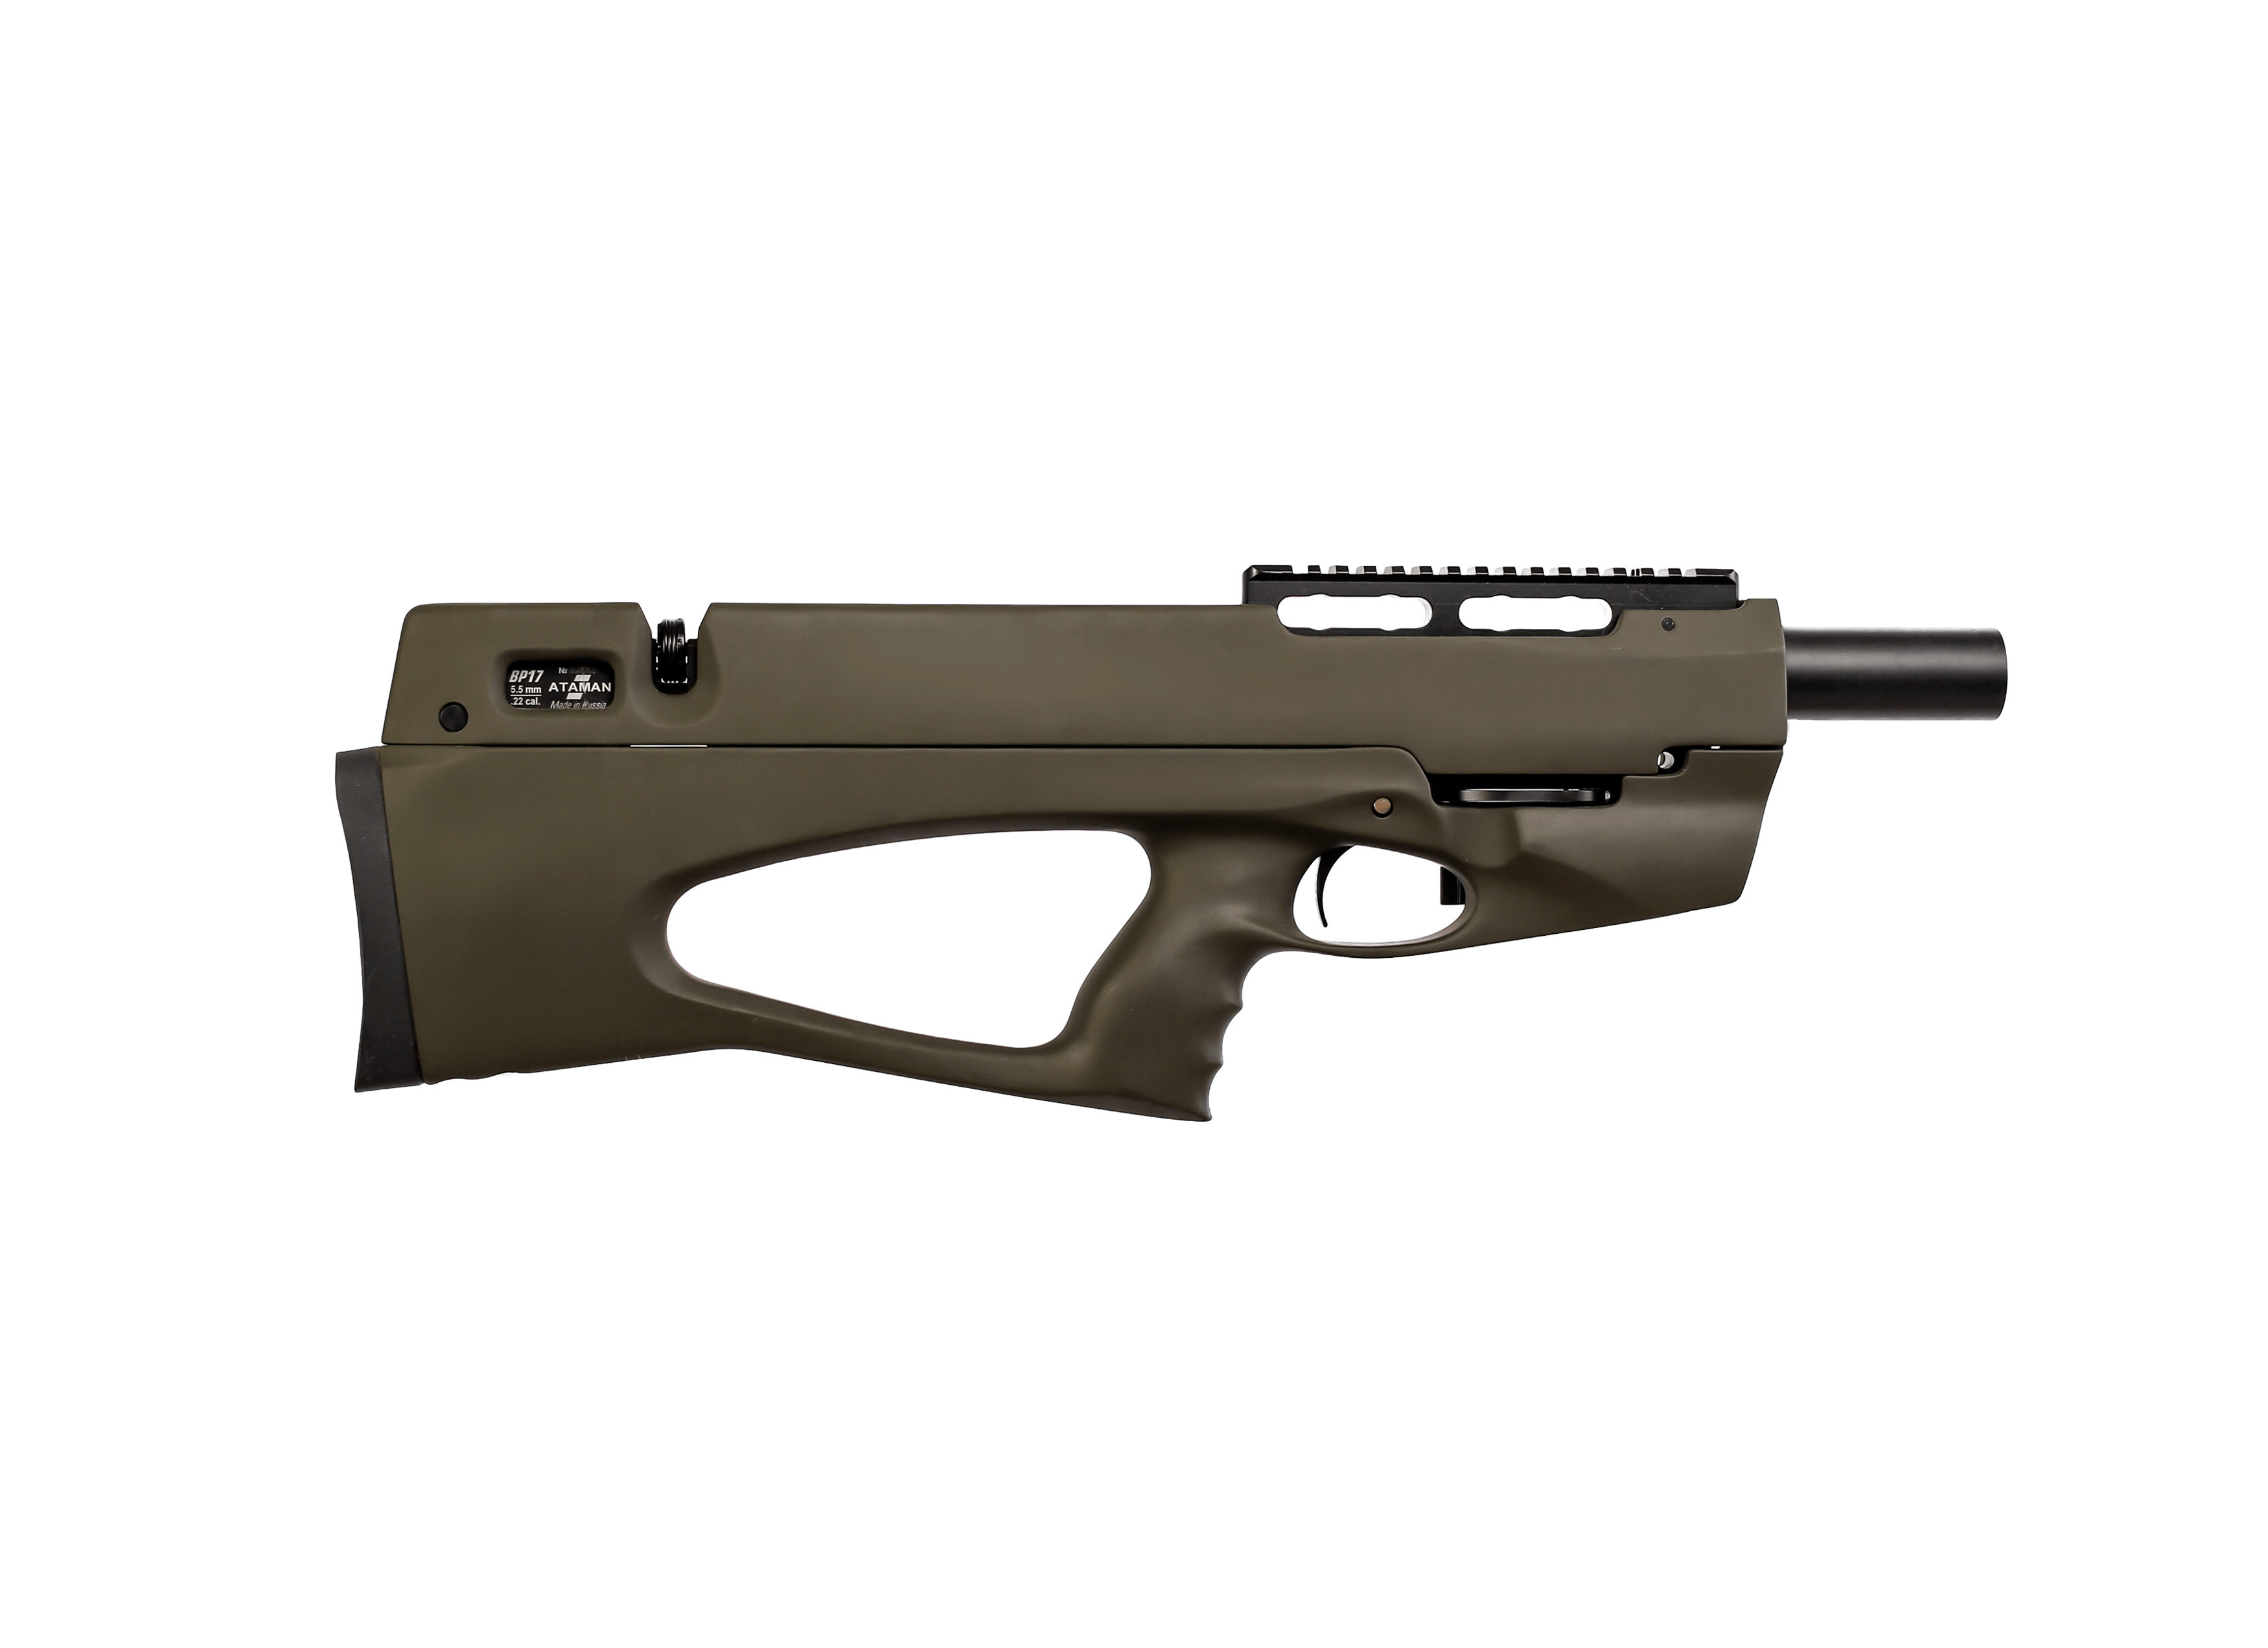 Пневматическая PCP винтовка ATAMAN Булл-пап BP17, кал.5,5мм (Soft-Touch Olive)